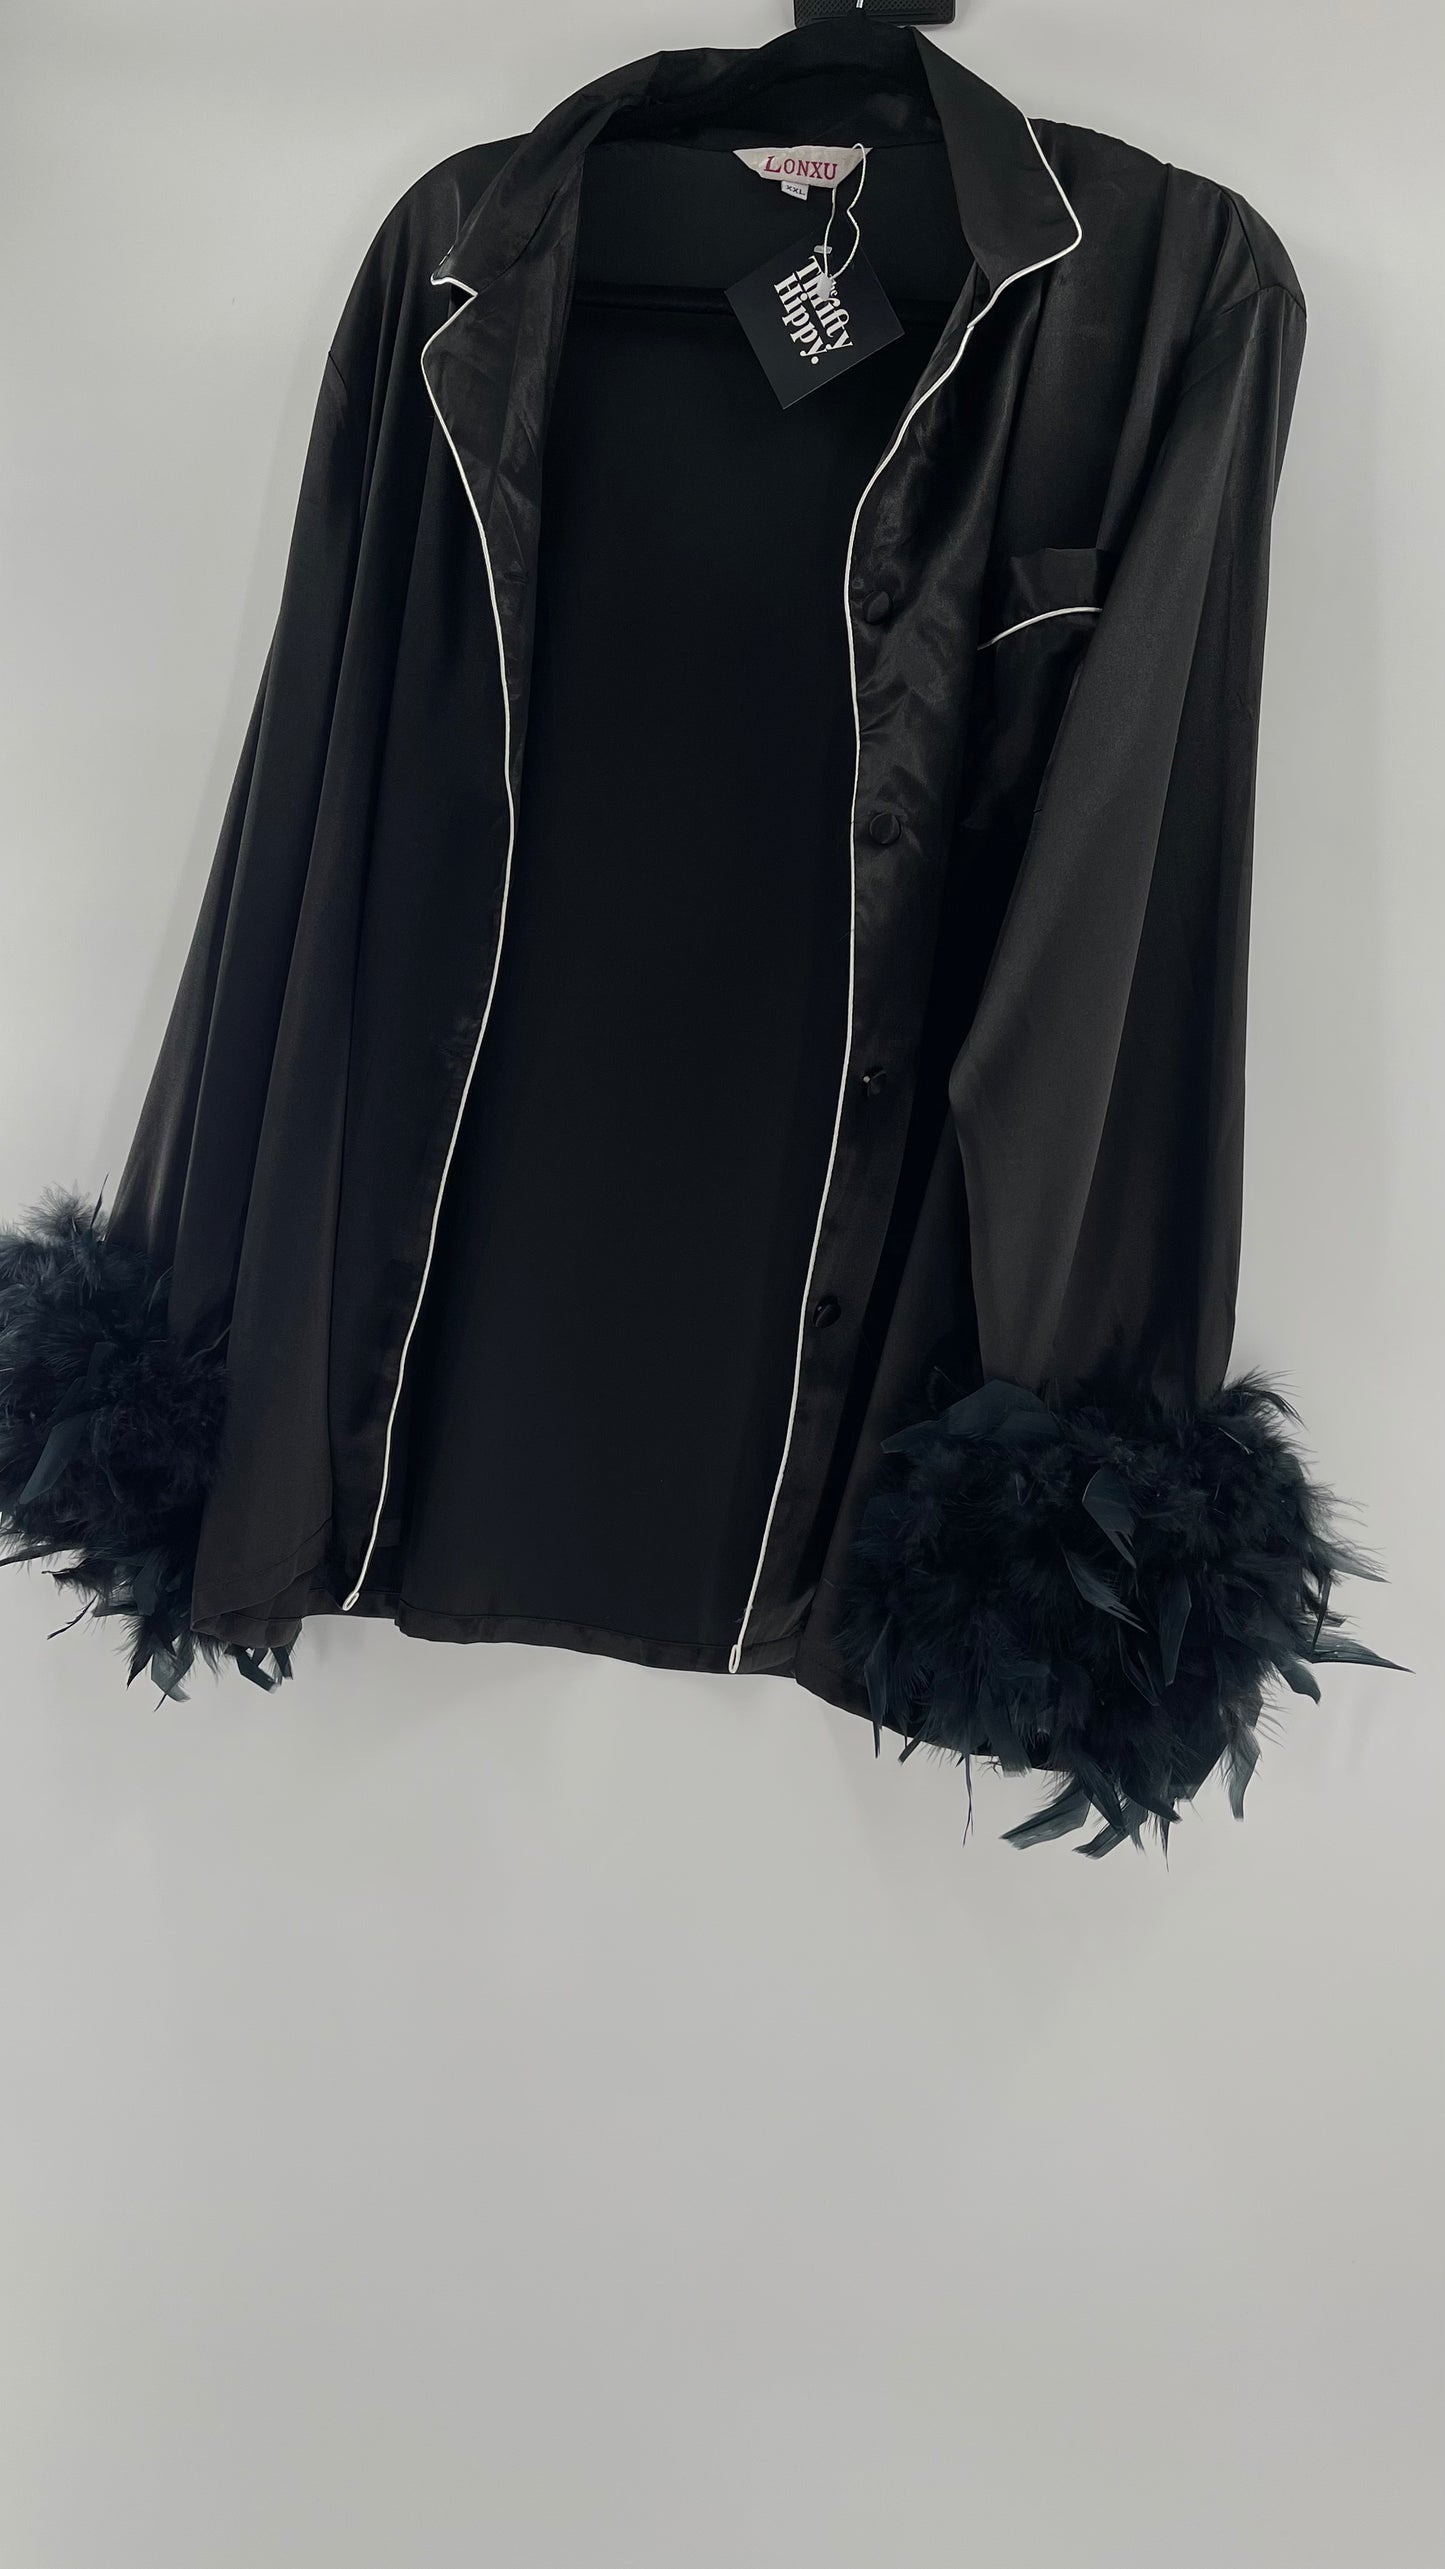 Lonxu Black Satin Pijama Top with Ostrich Feather Cuffs (XXL)